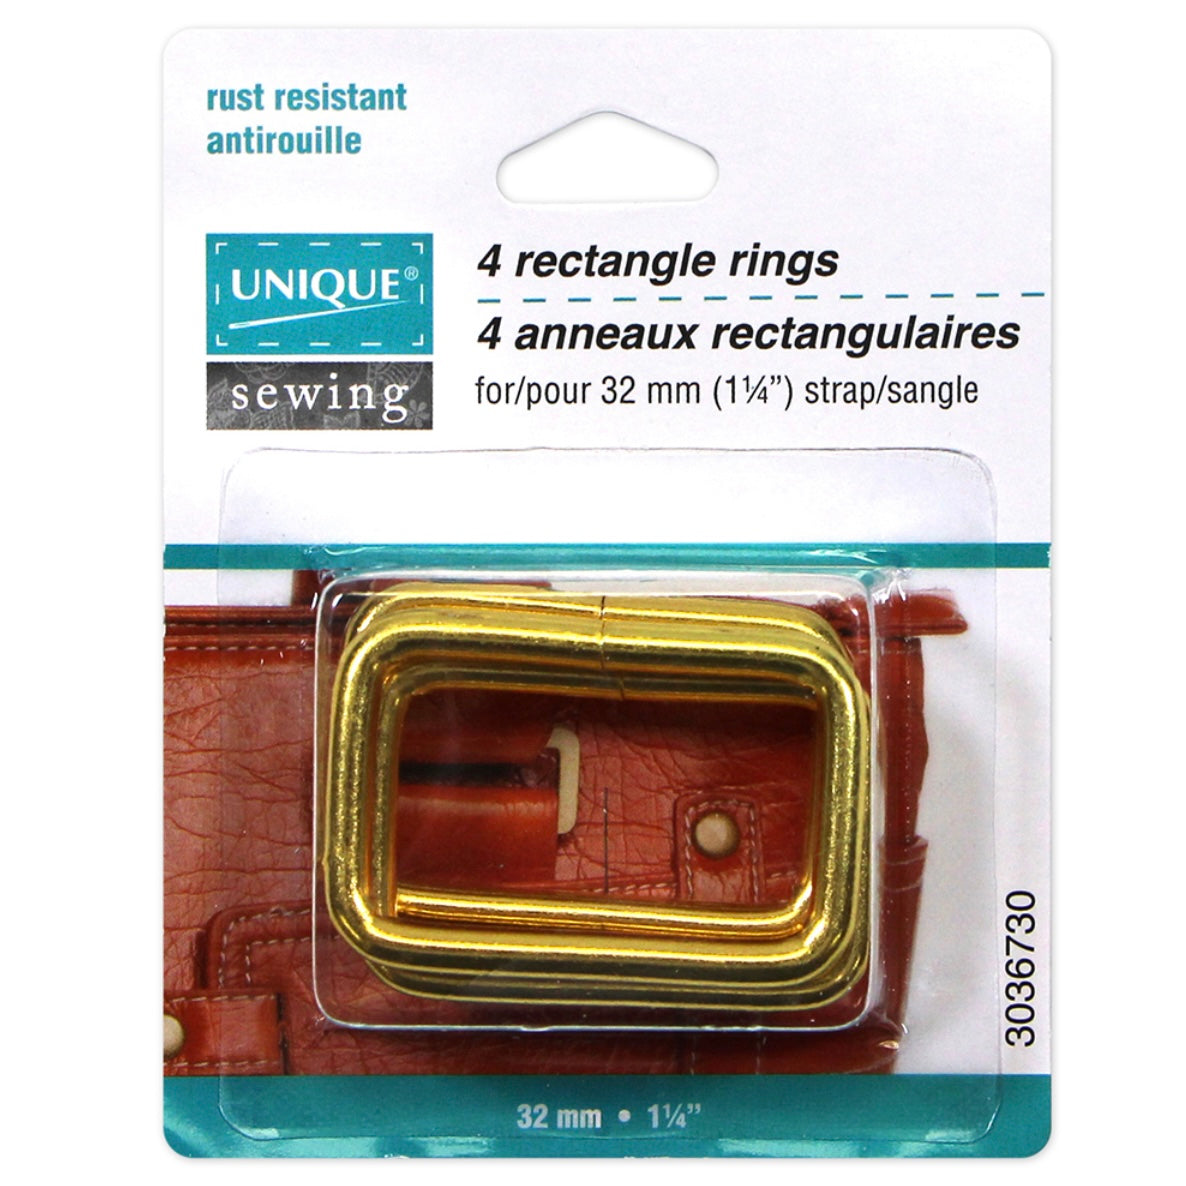 Metal Rectangle Rings - 25mm (1″) - Gold - 4 pcs.